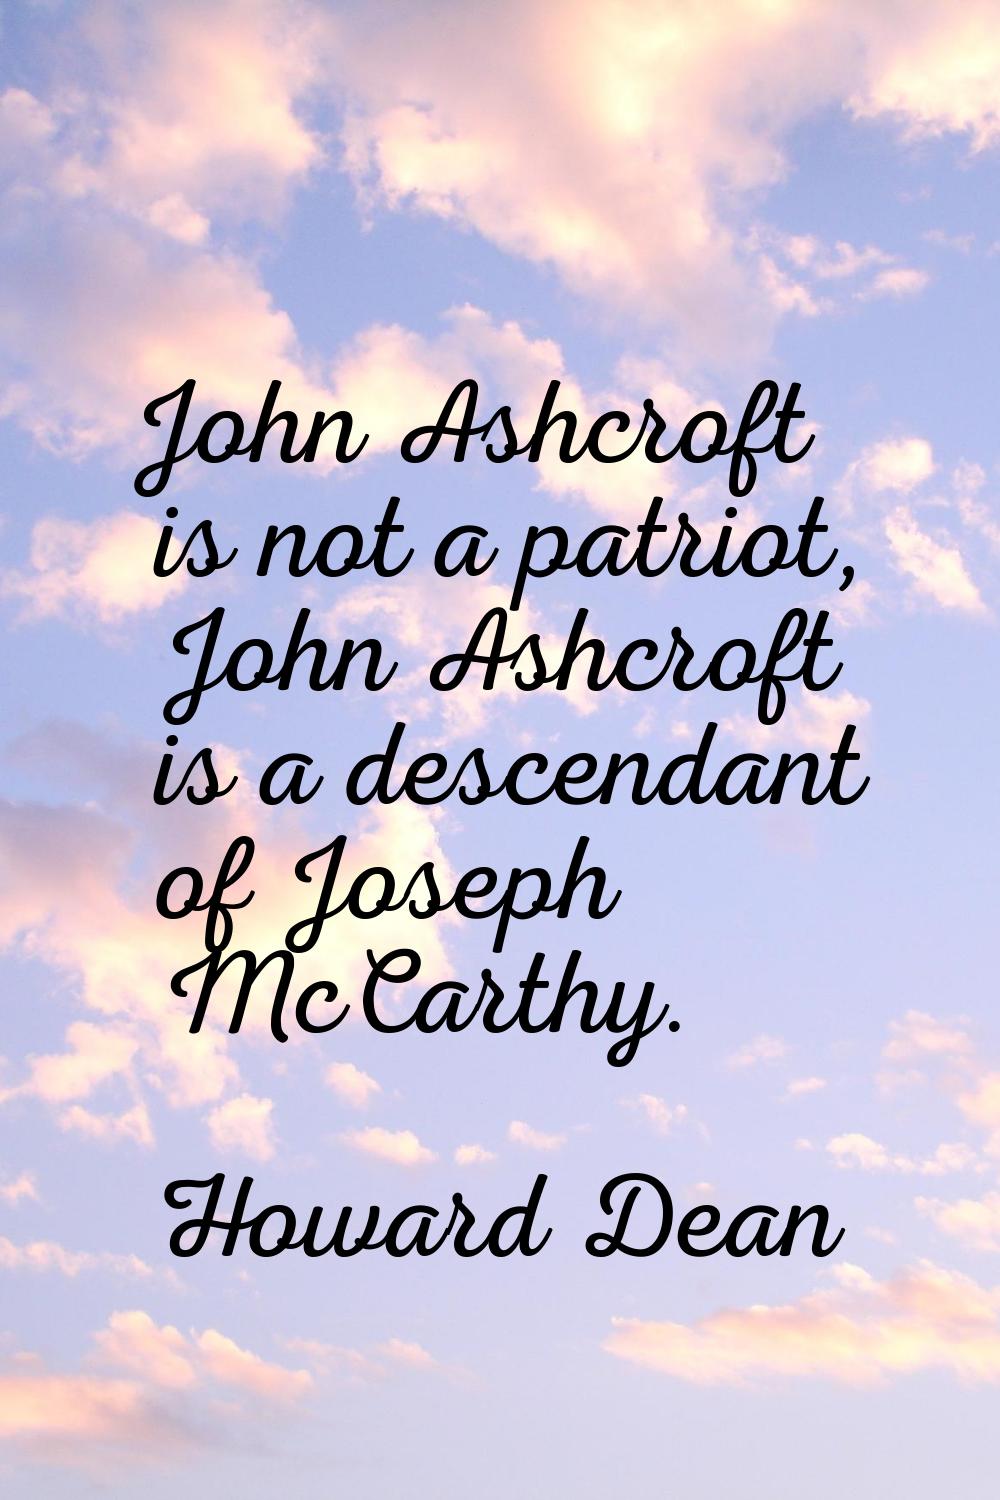 John Ashcroft is not a patriot, John Ashcroft is a descendant of Joseph McCarthy.